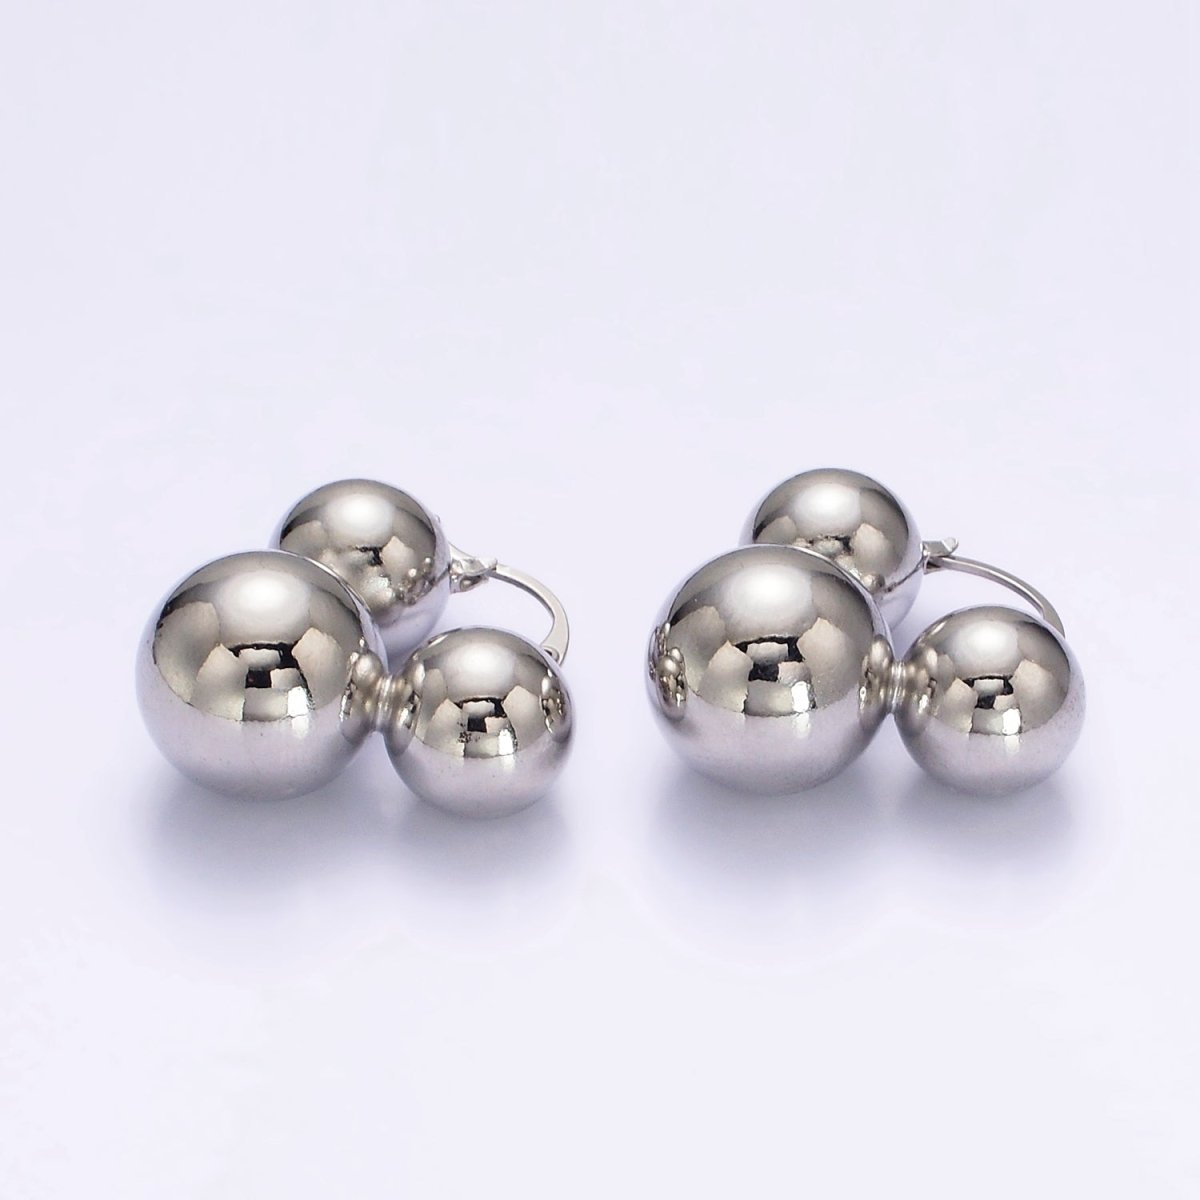 14K Gold Filled Triple Beaded Bubble Ball French Lock Latch Hoop Earrings | AE850 AE851 - DLUXCA